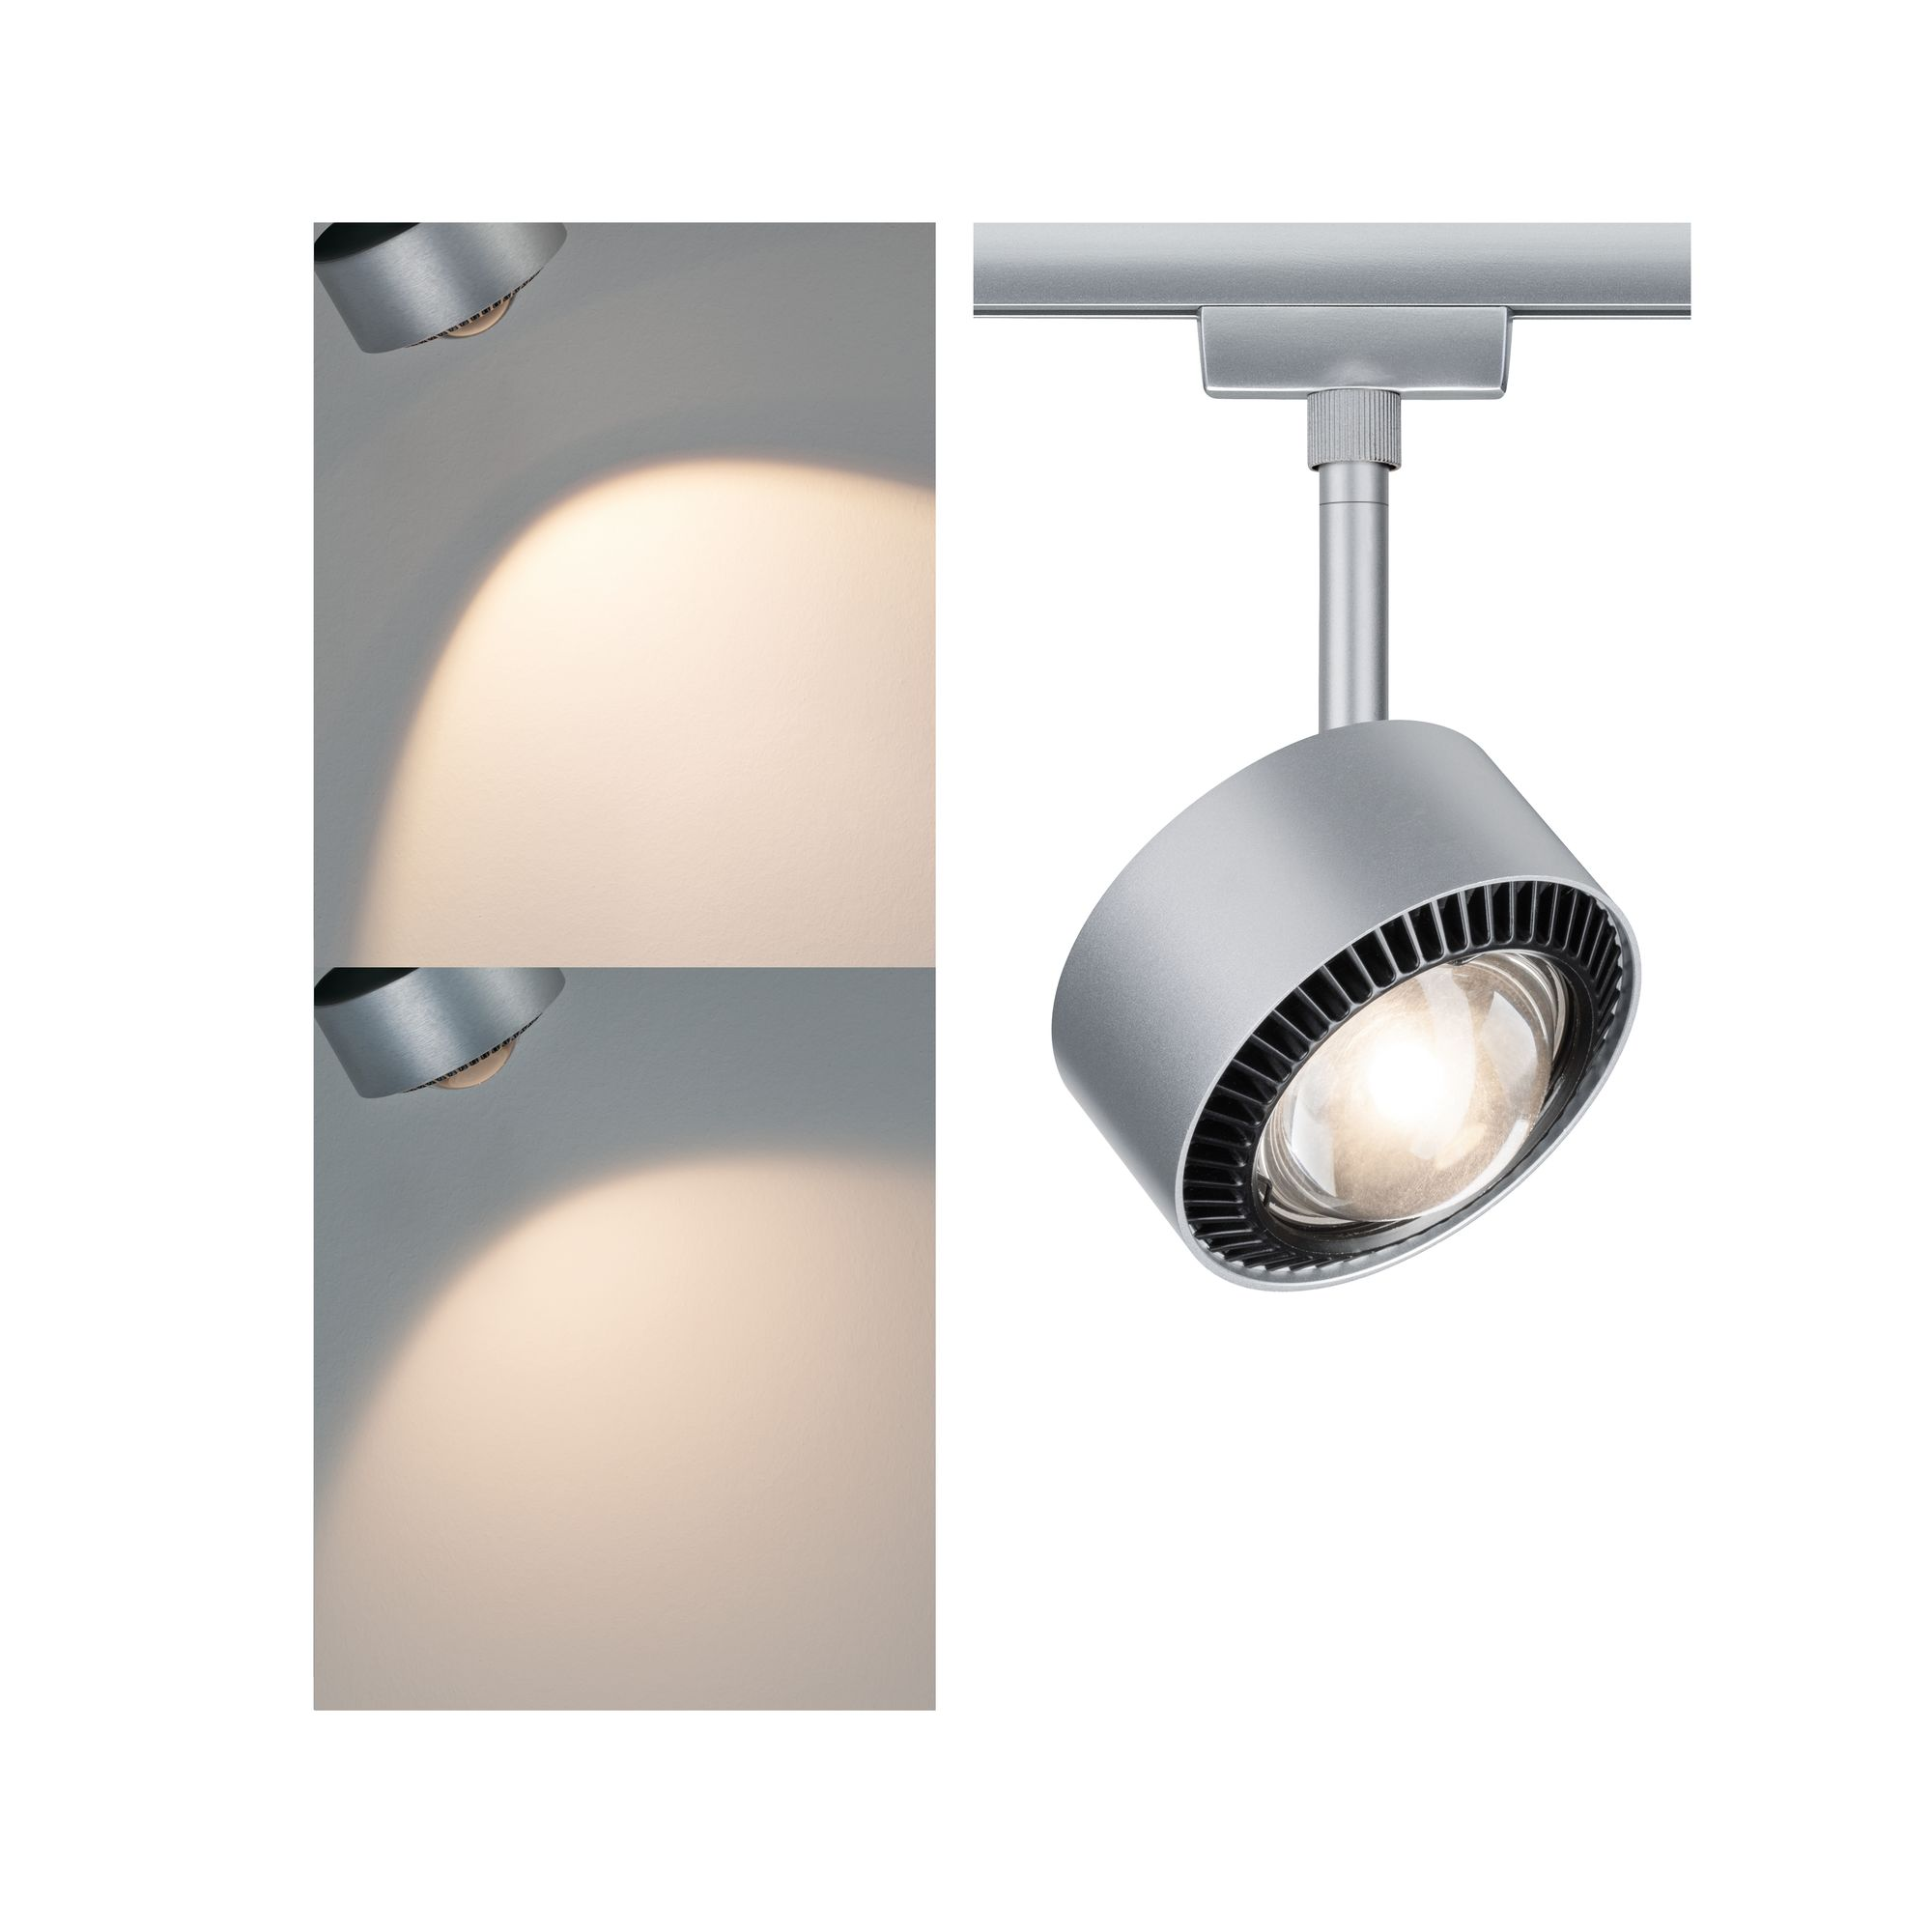 LED-Spot URail System 'Aldan' 9 W Chrom matt/schwarz dimmbar + product picture